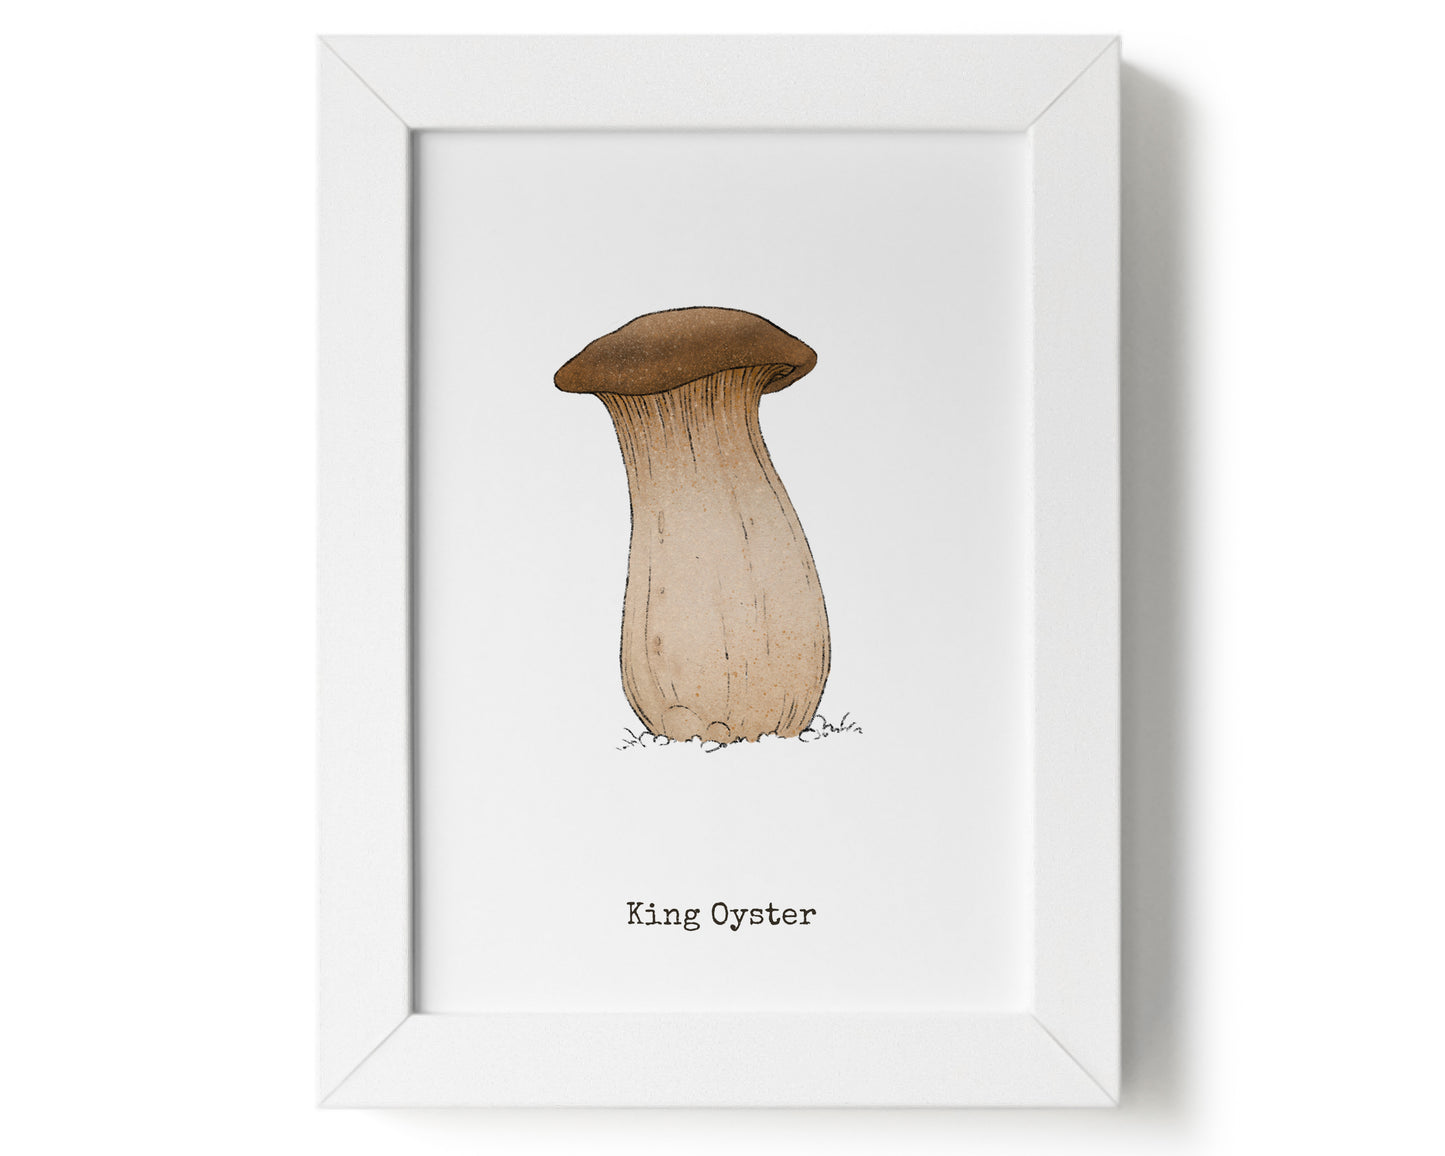 "King Oyster" by Catherine Hébert - King Oyster Mushroom Art Print - 5"x7" size